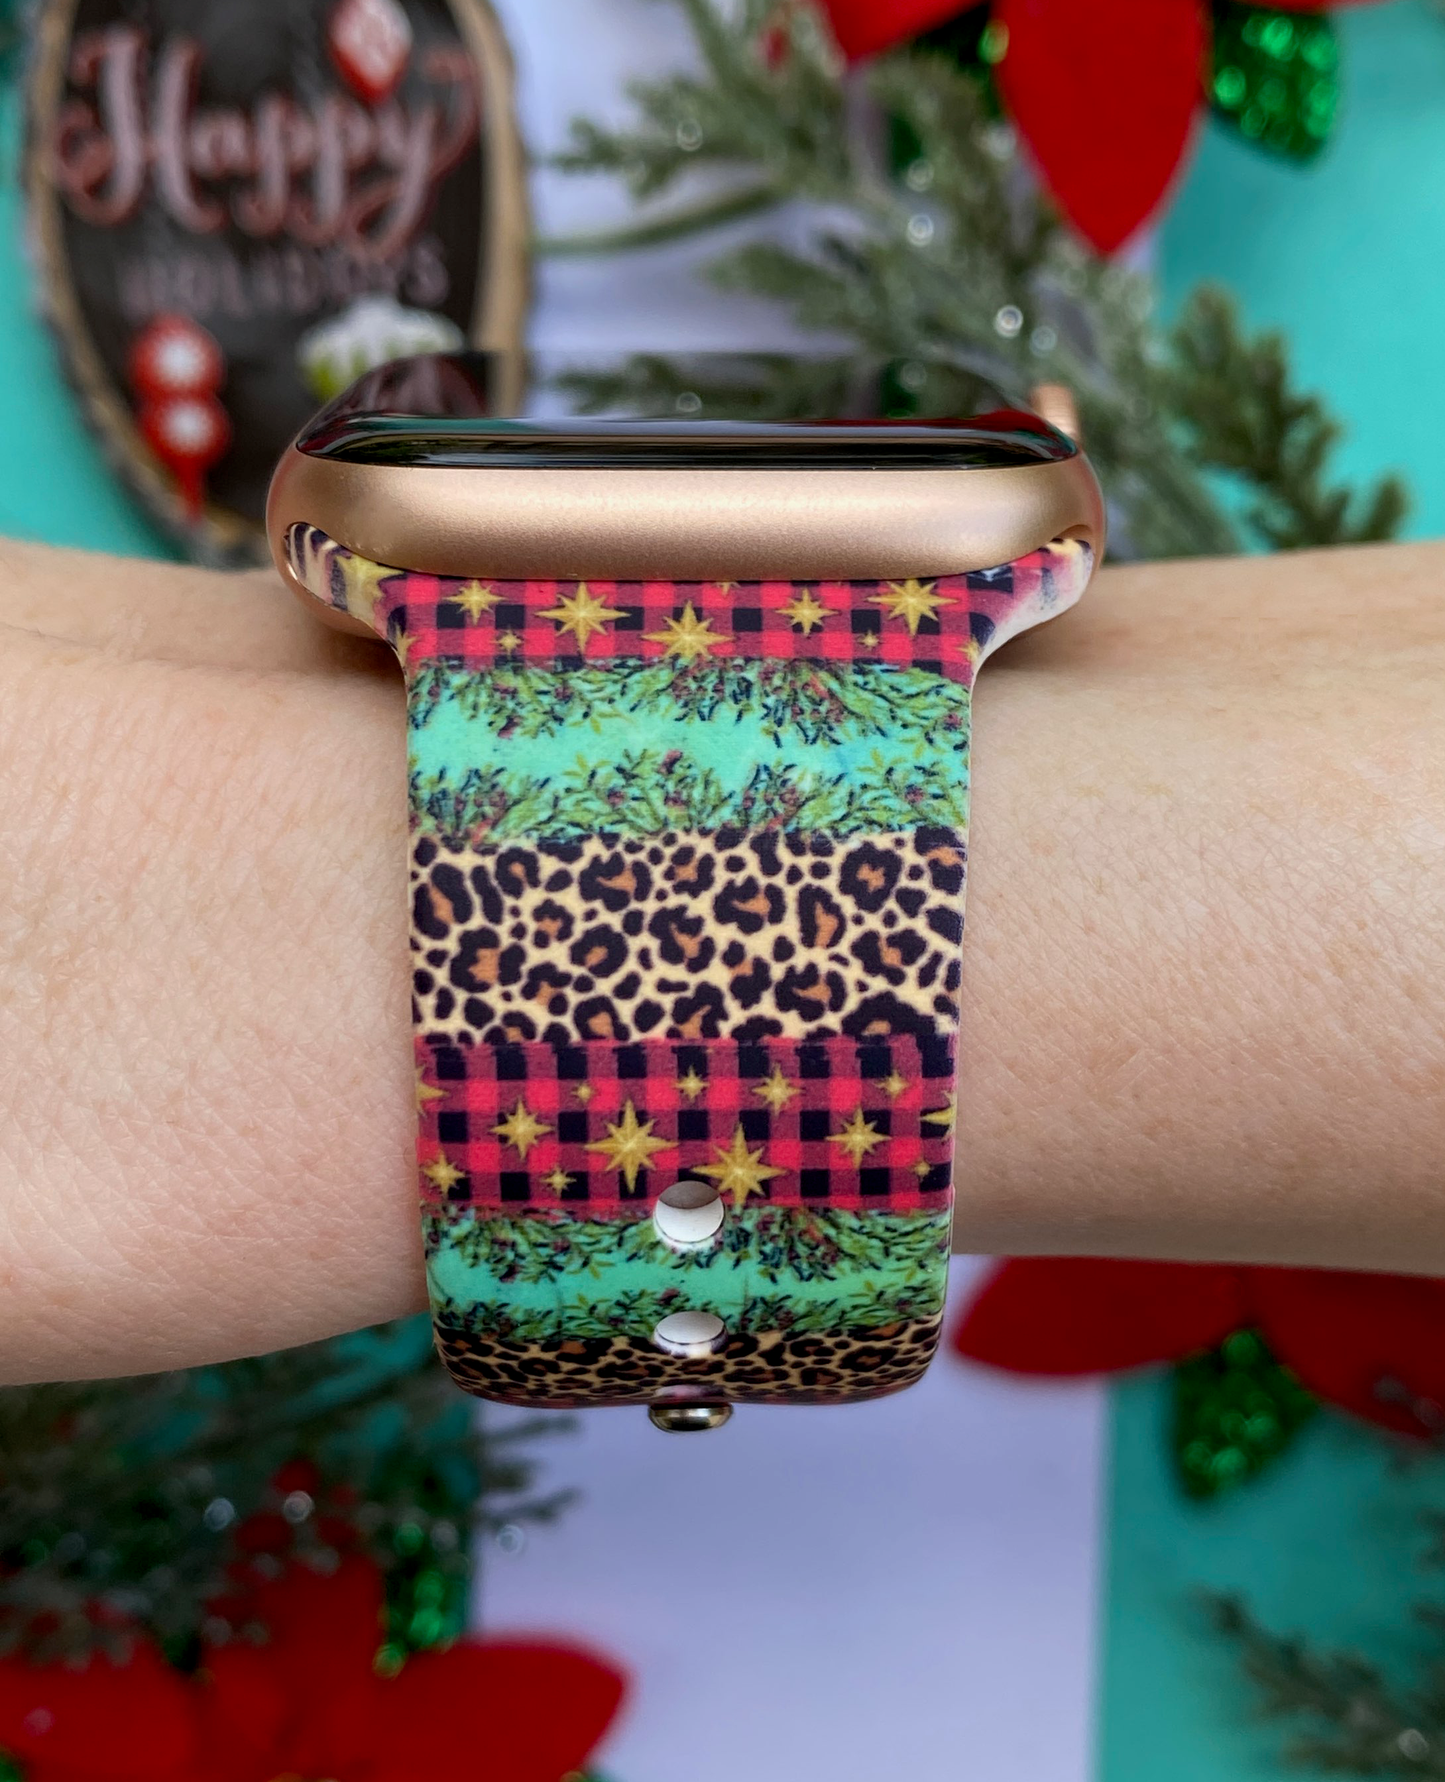 Festive Christmas Apple Watch Band